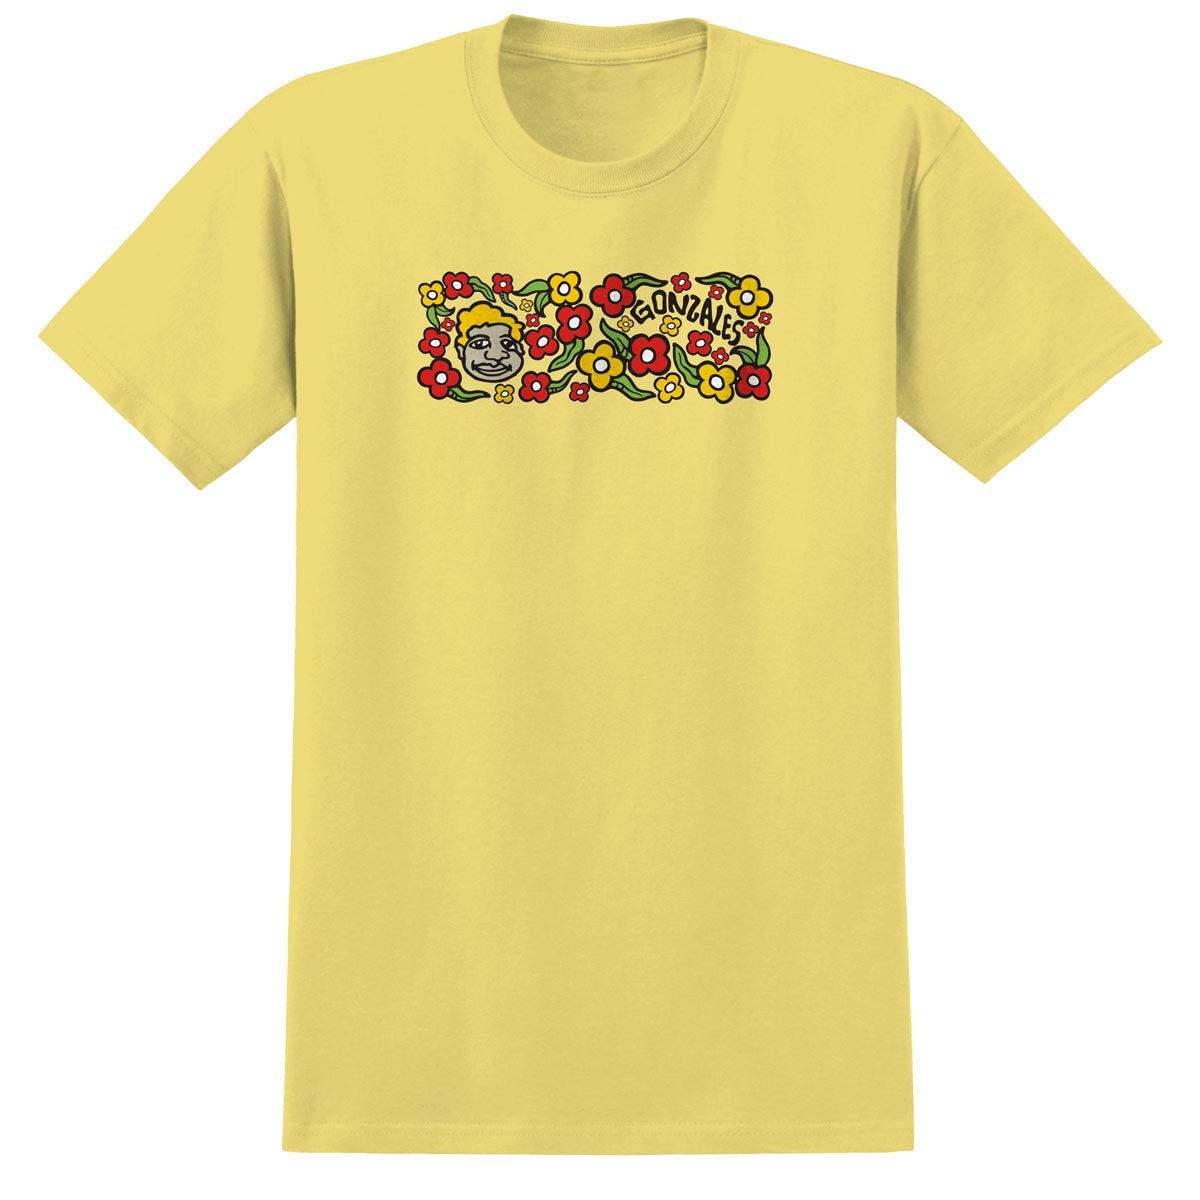 Krooked Sweatpants T-Shirt - Cornsilk/Multi Color image 1